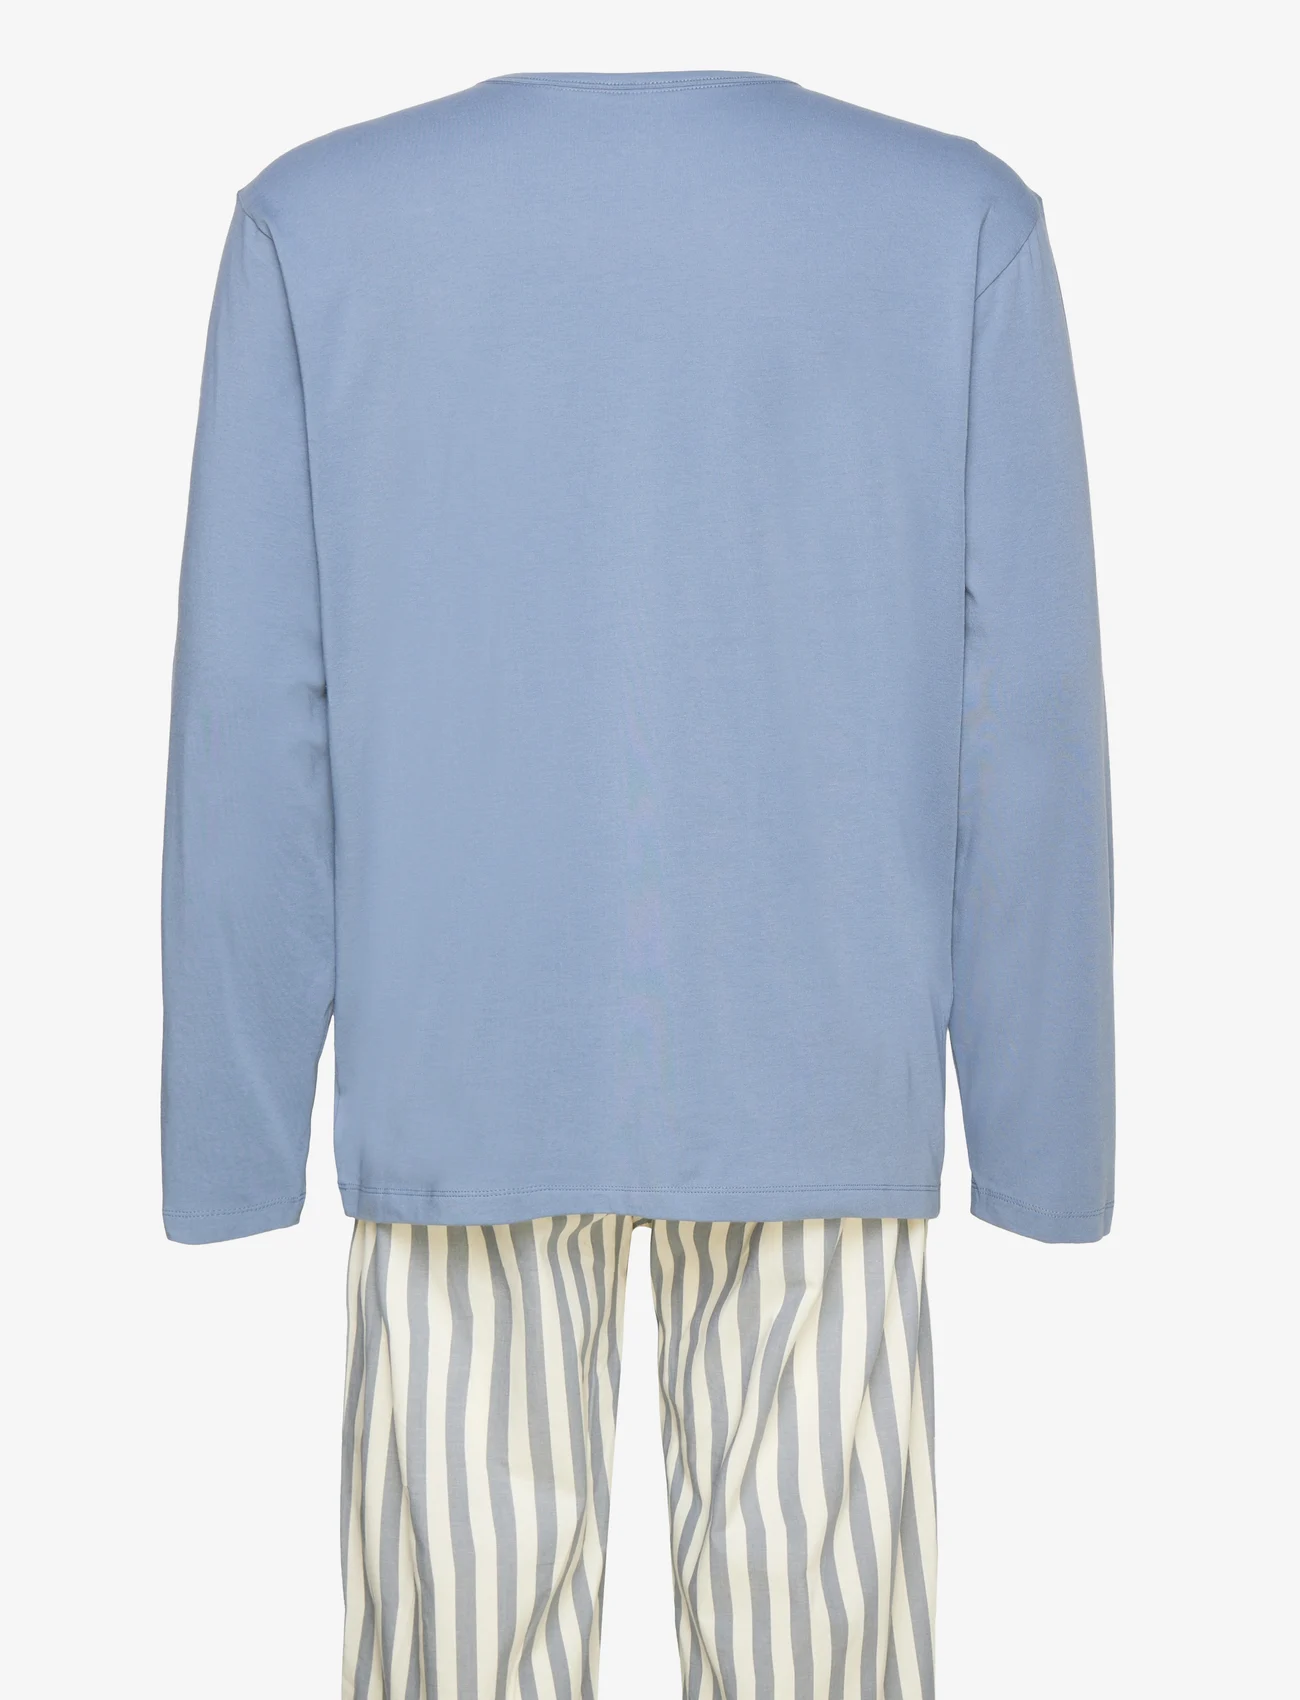 Calvin Klein - L/S PANT SET - pyjamasset - flt stn tp, chbry strpe_flt stn btm - 1